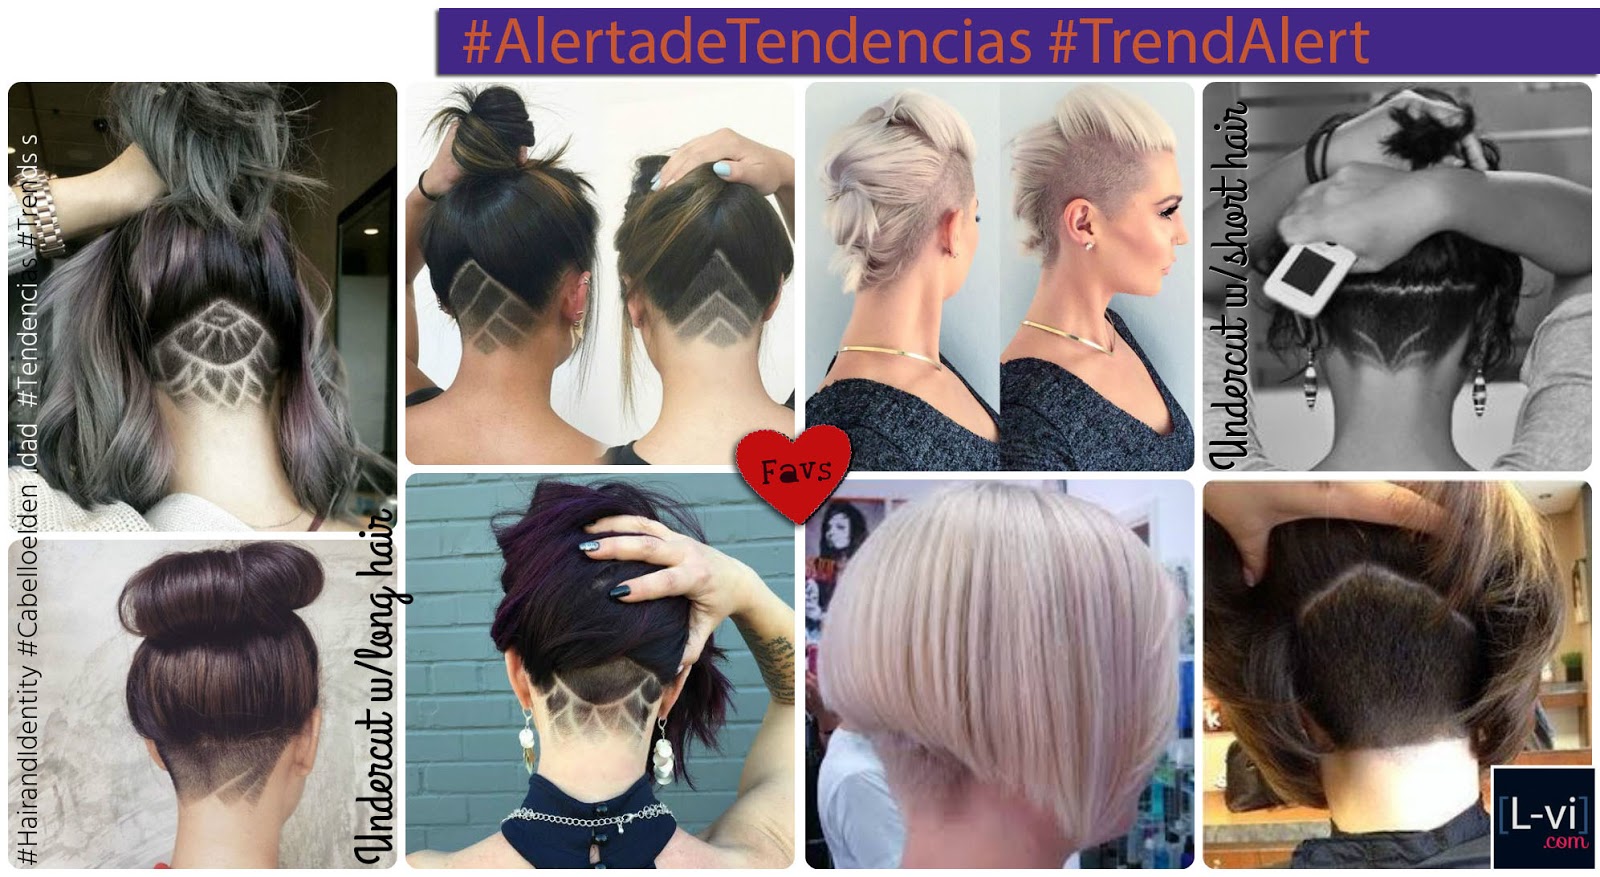 tattoo mandala trend / Cortes hairstyles pelo Undercut de con [TrendAlert]